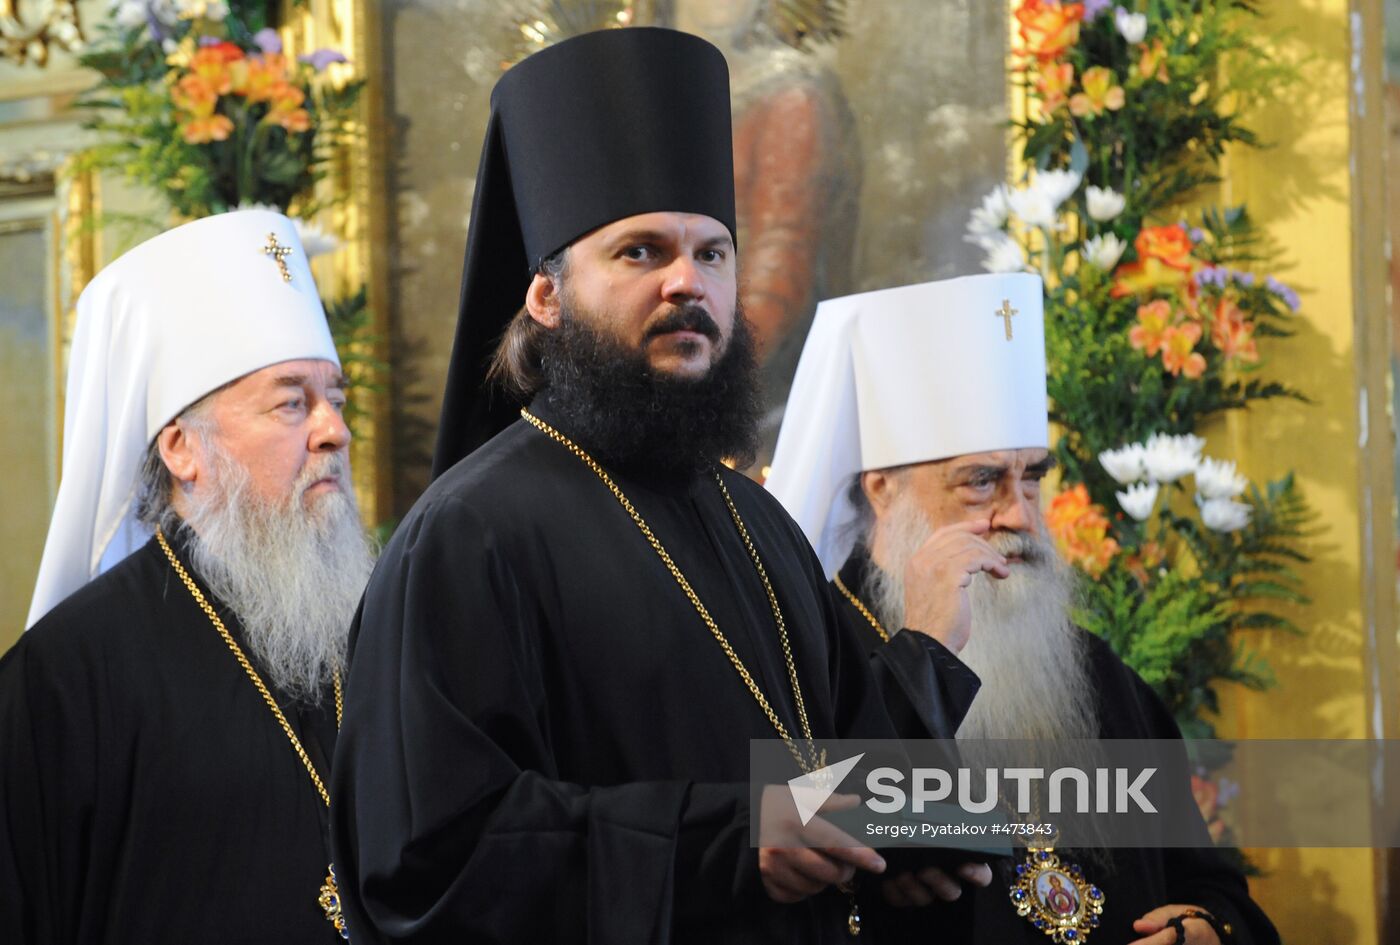 Rector of Petersburg Seminary Bishop of Gatchina